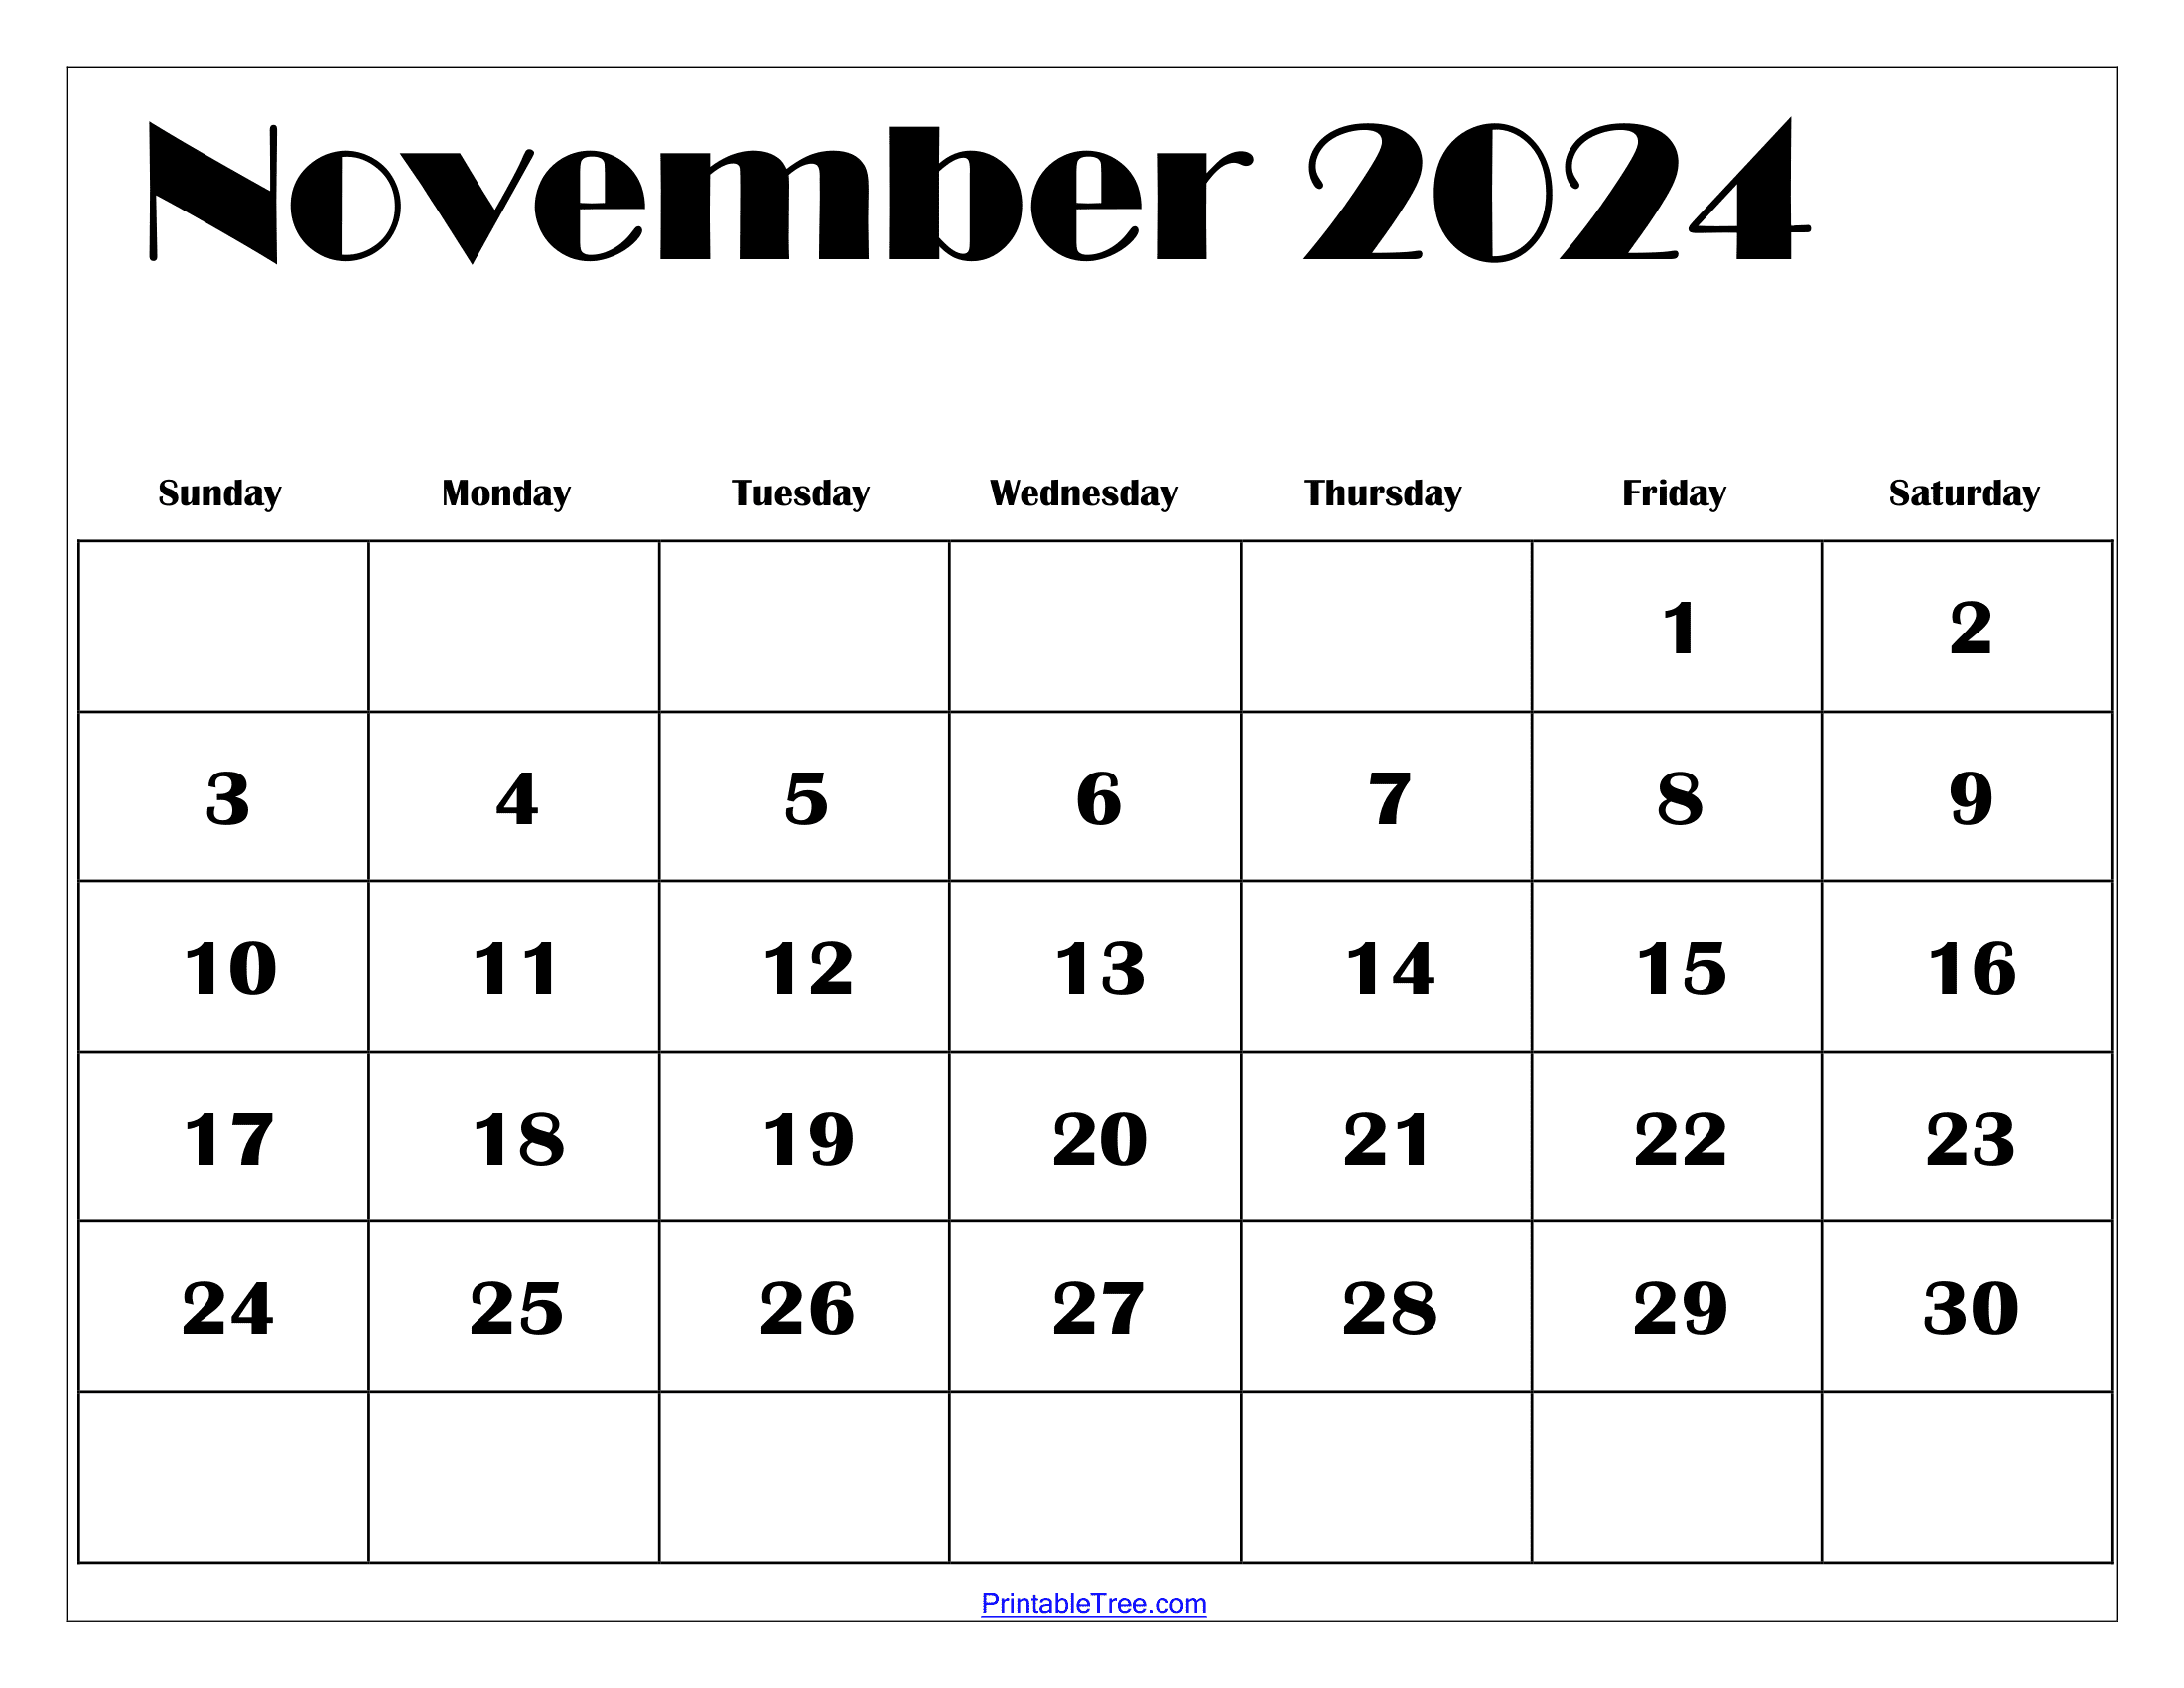 November 2024 Calendar Printable Pdf Template With Holidays for 2024 Printable Calendar November